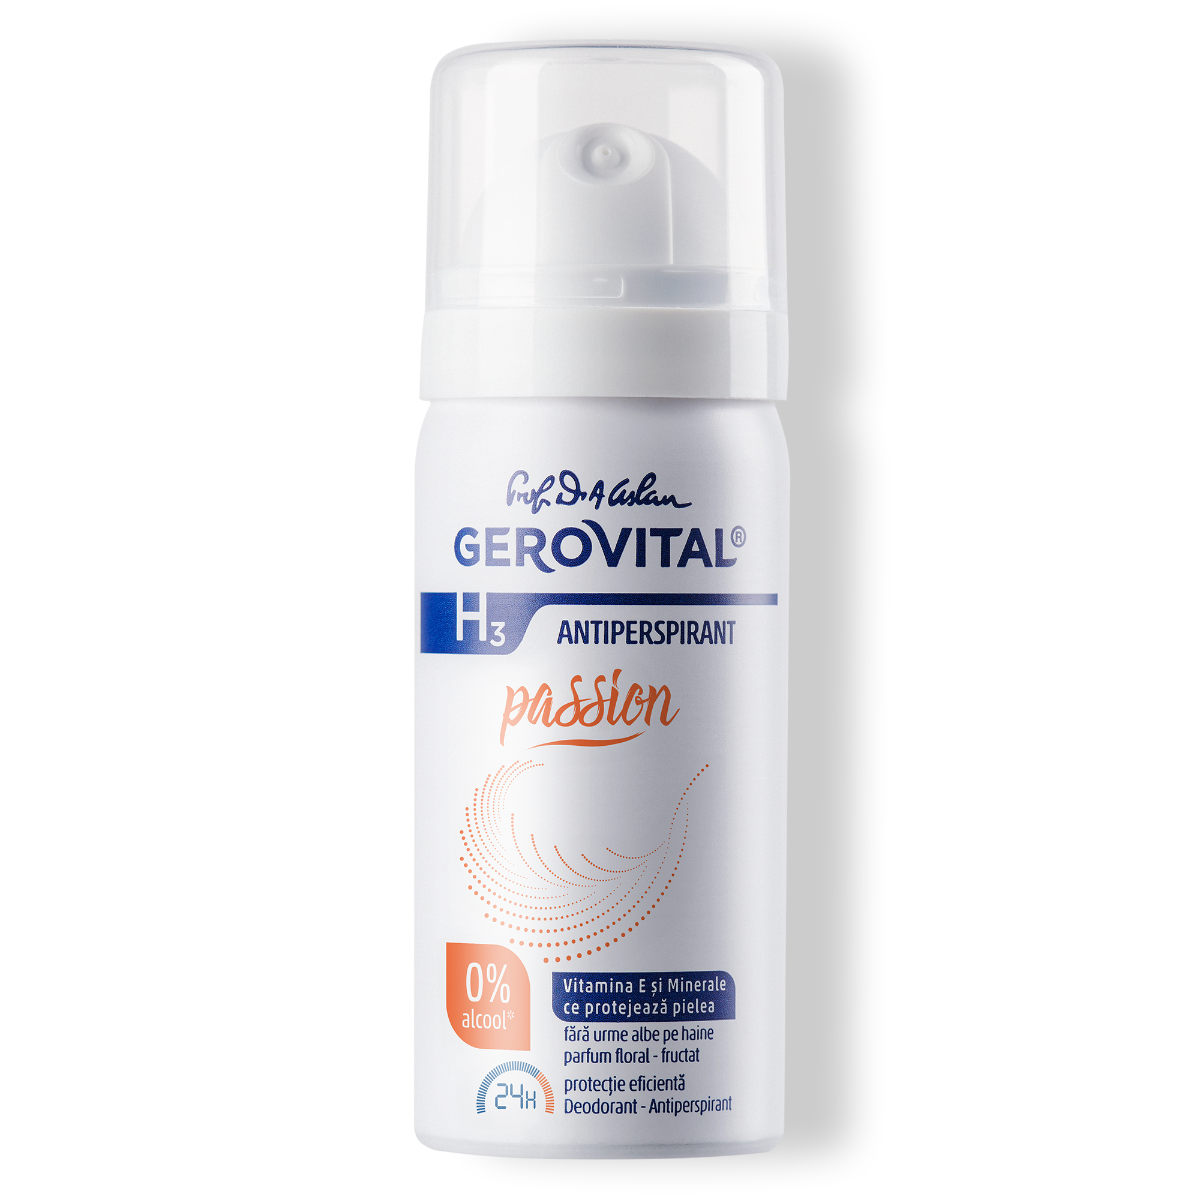 Deodorant Antiperspirant Gerovital H3 - Passion 40 Ml